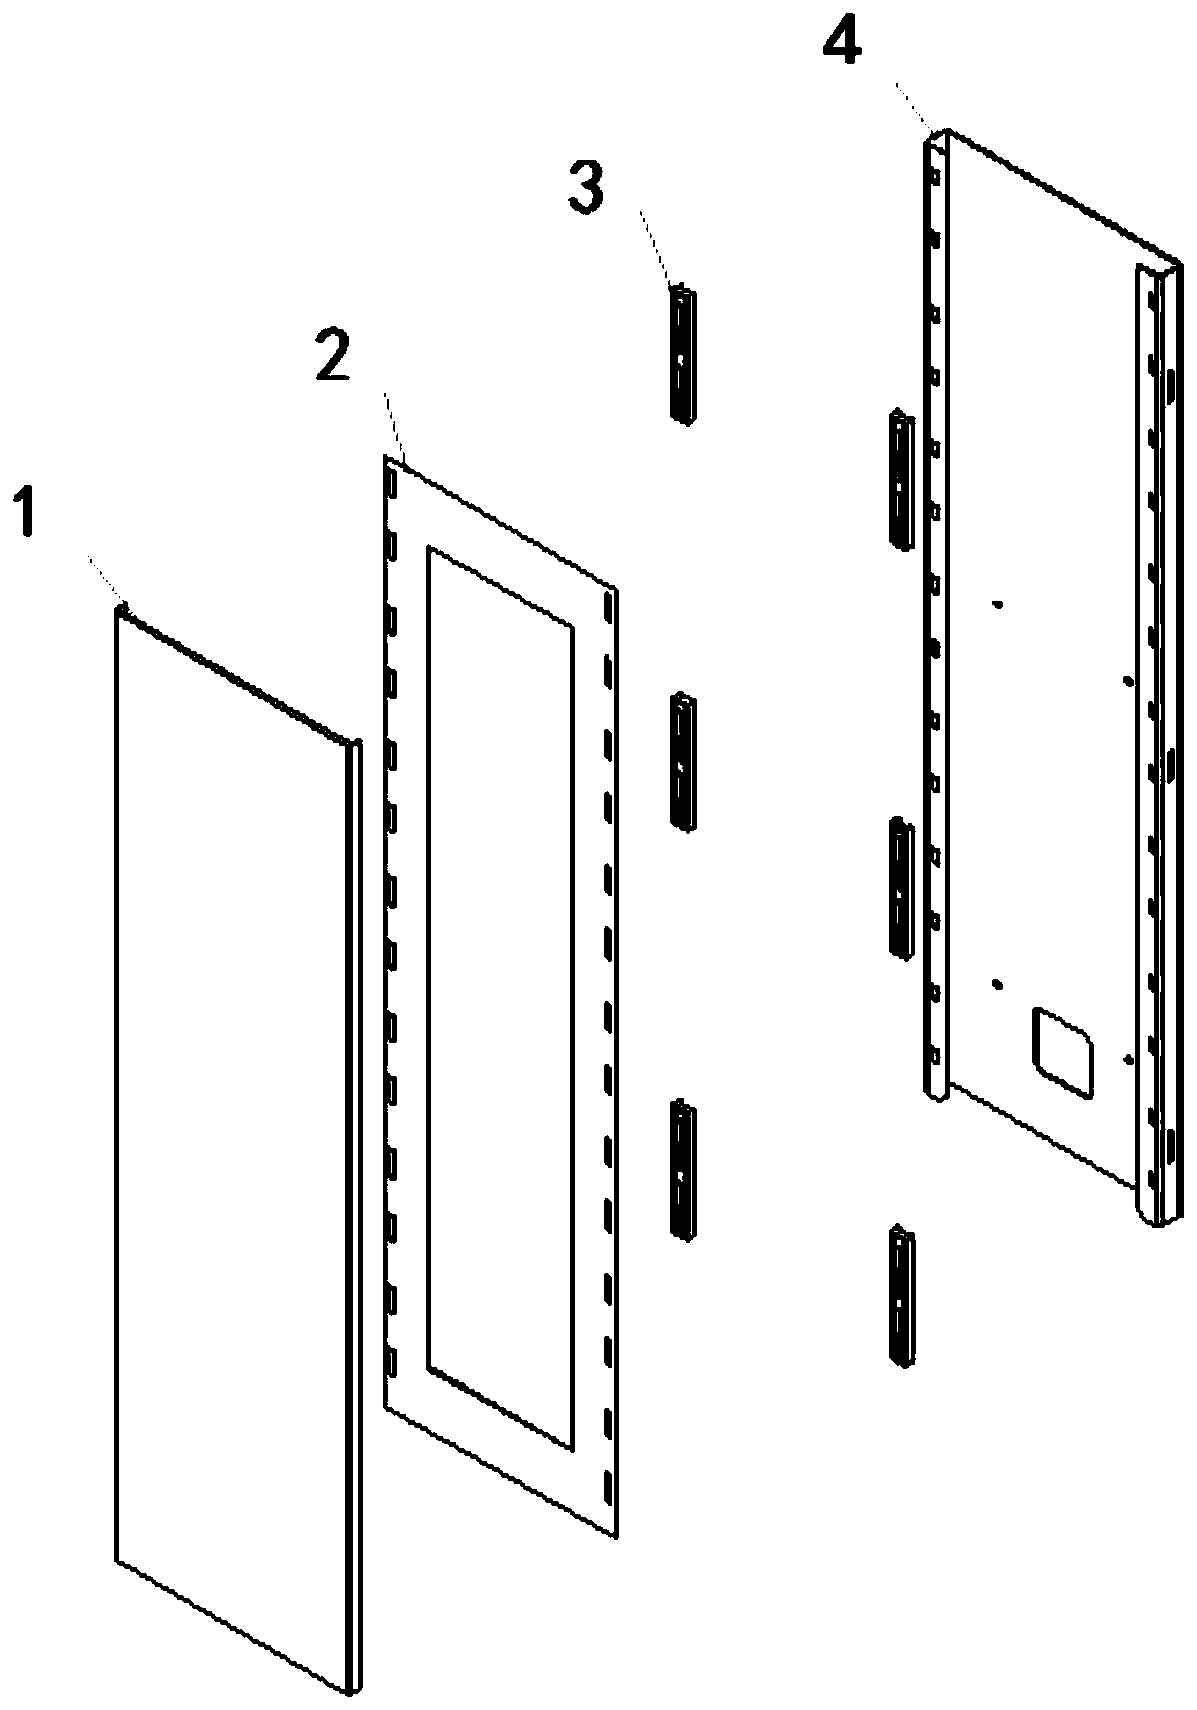 A hook type elevator panel